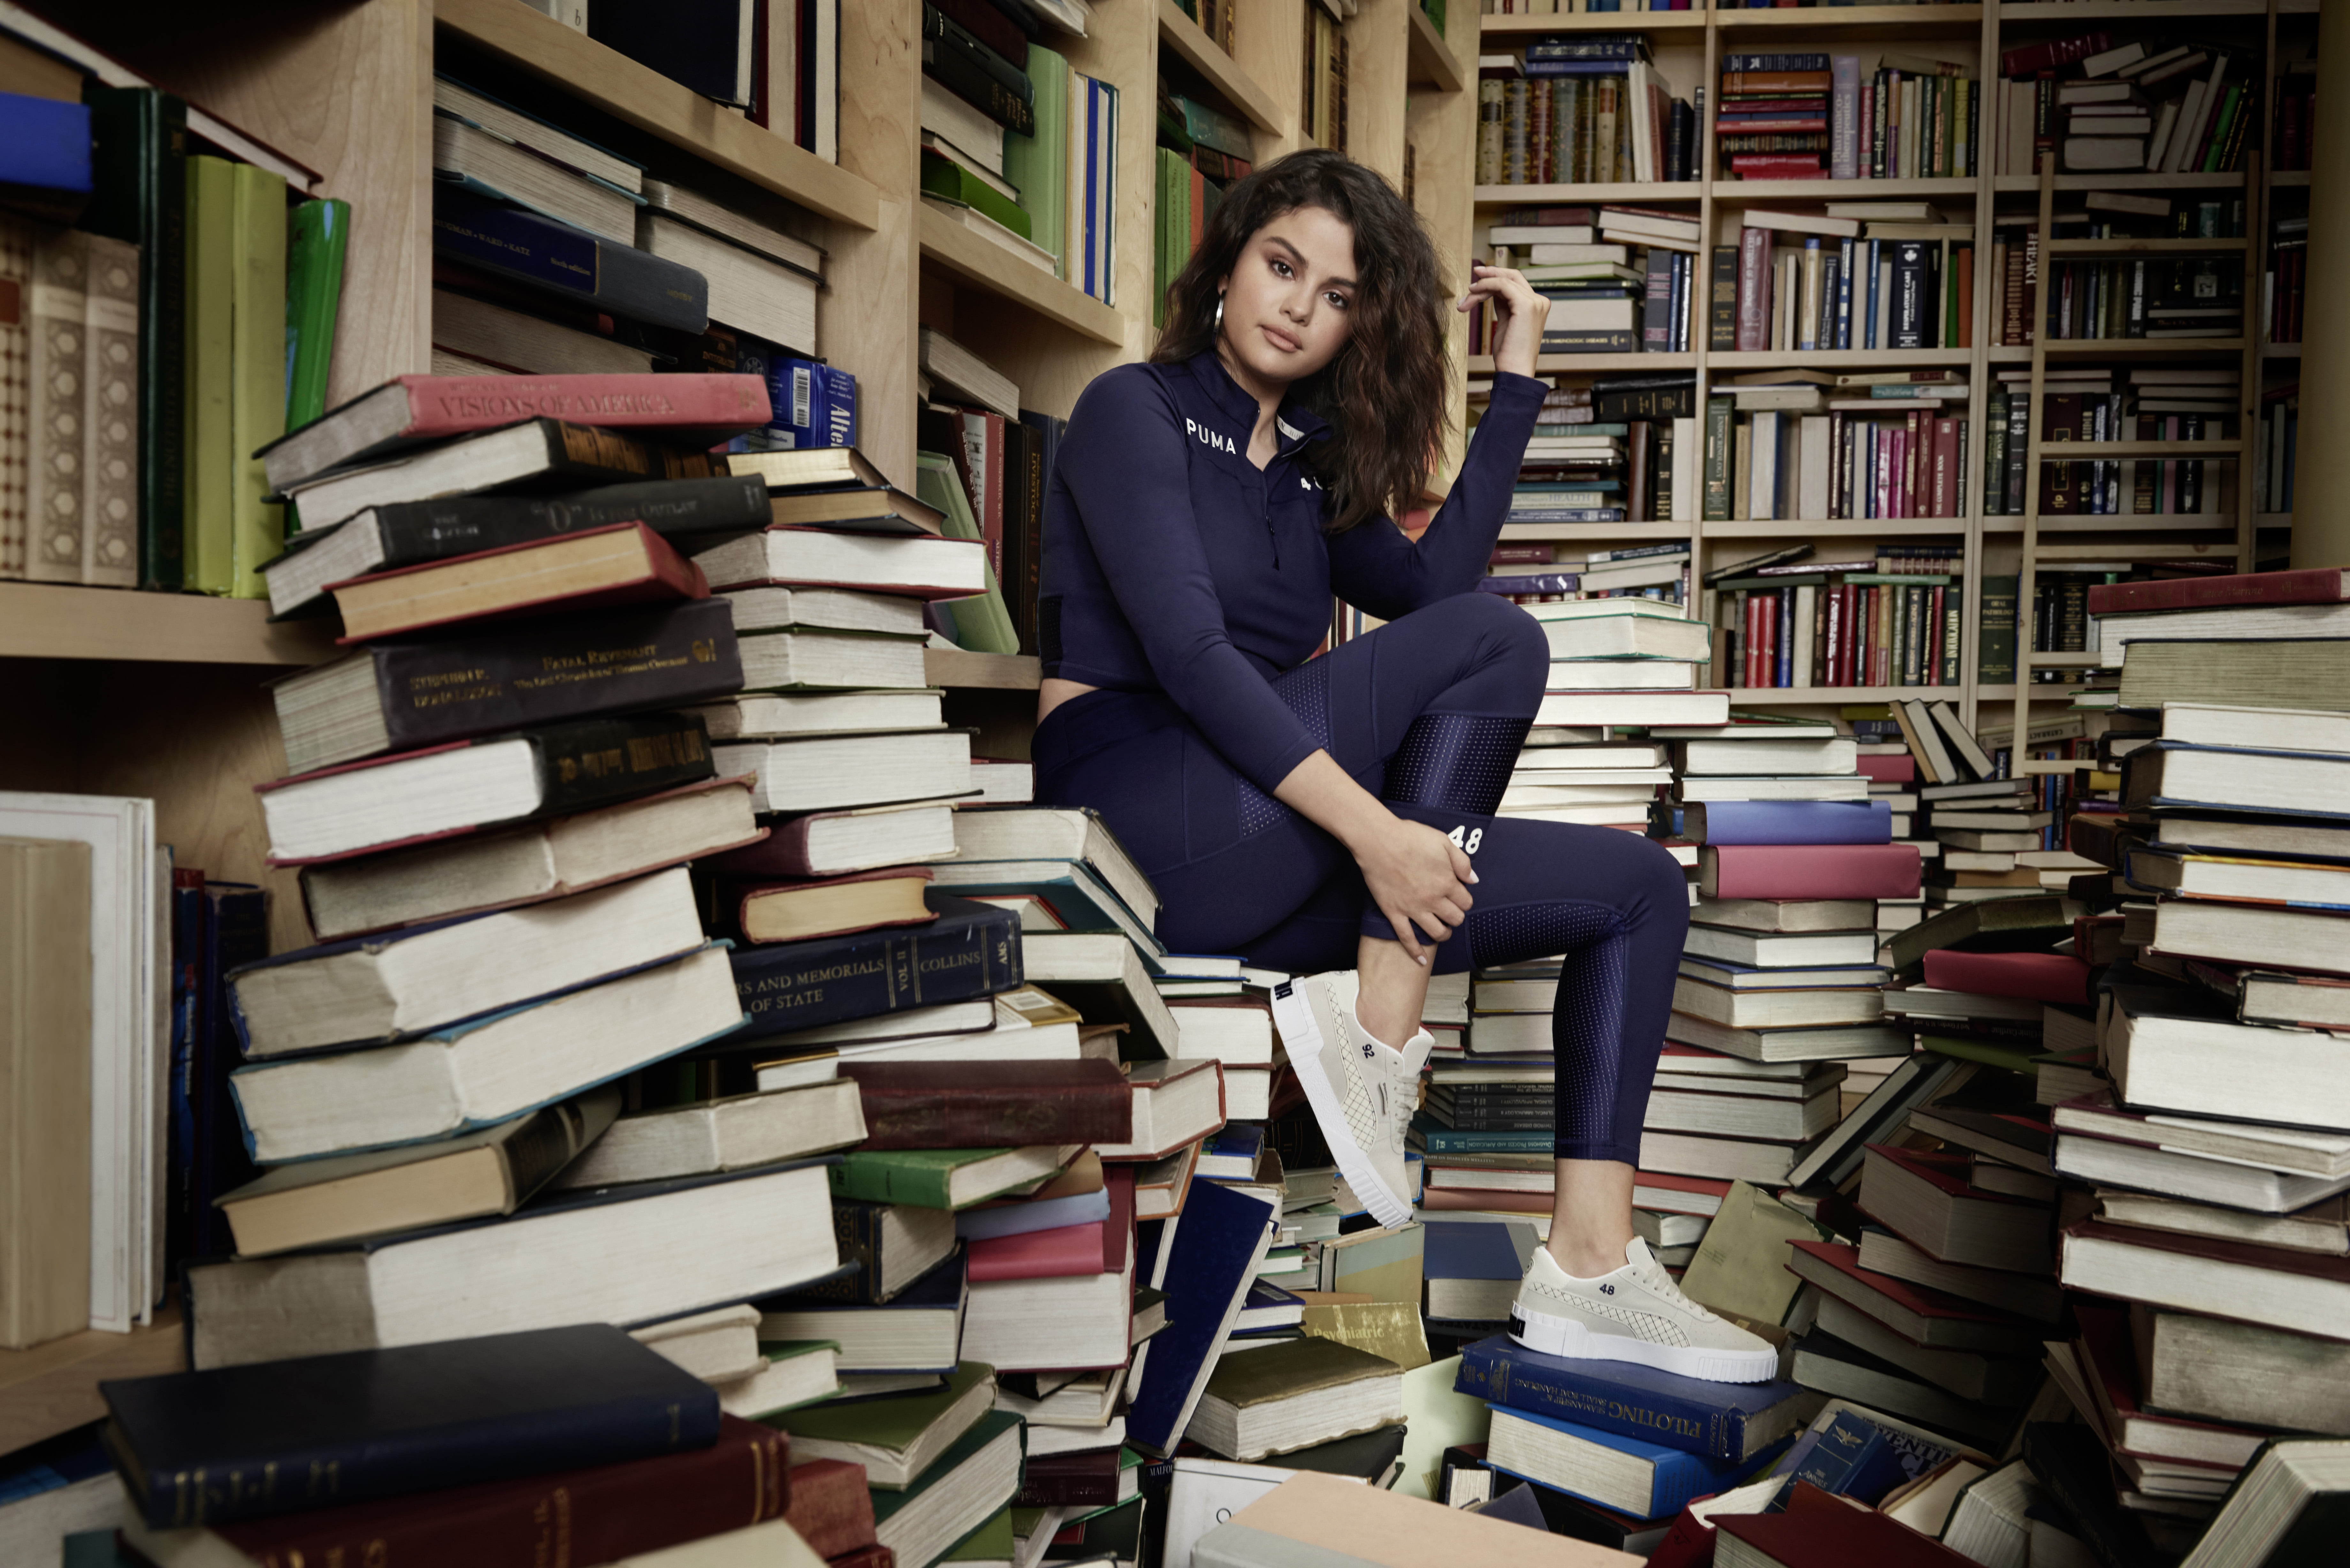 Singers, Selena Gomez, American, Book, Brunette, Library, Shoe